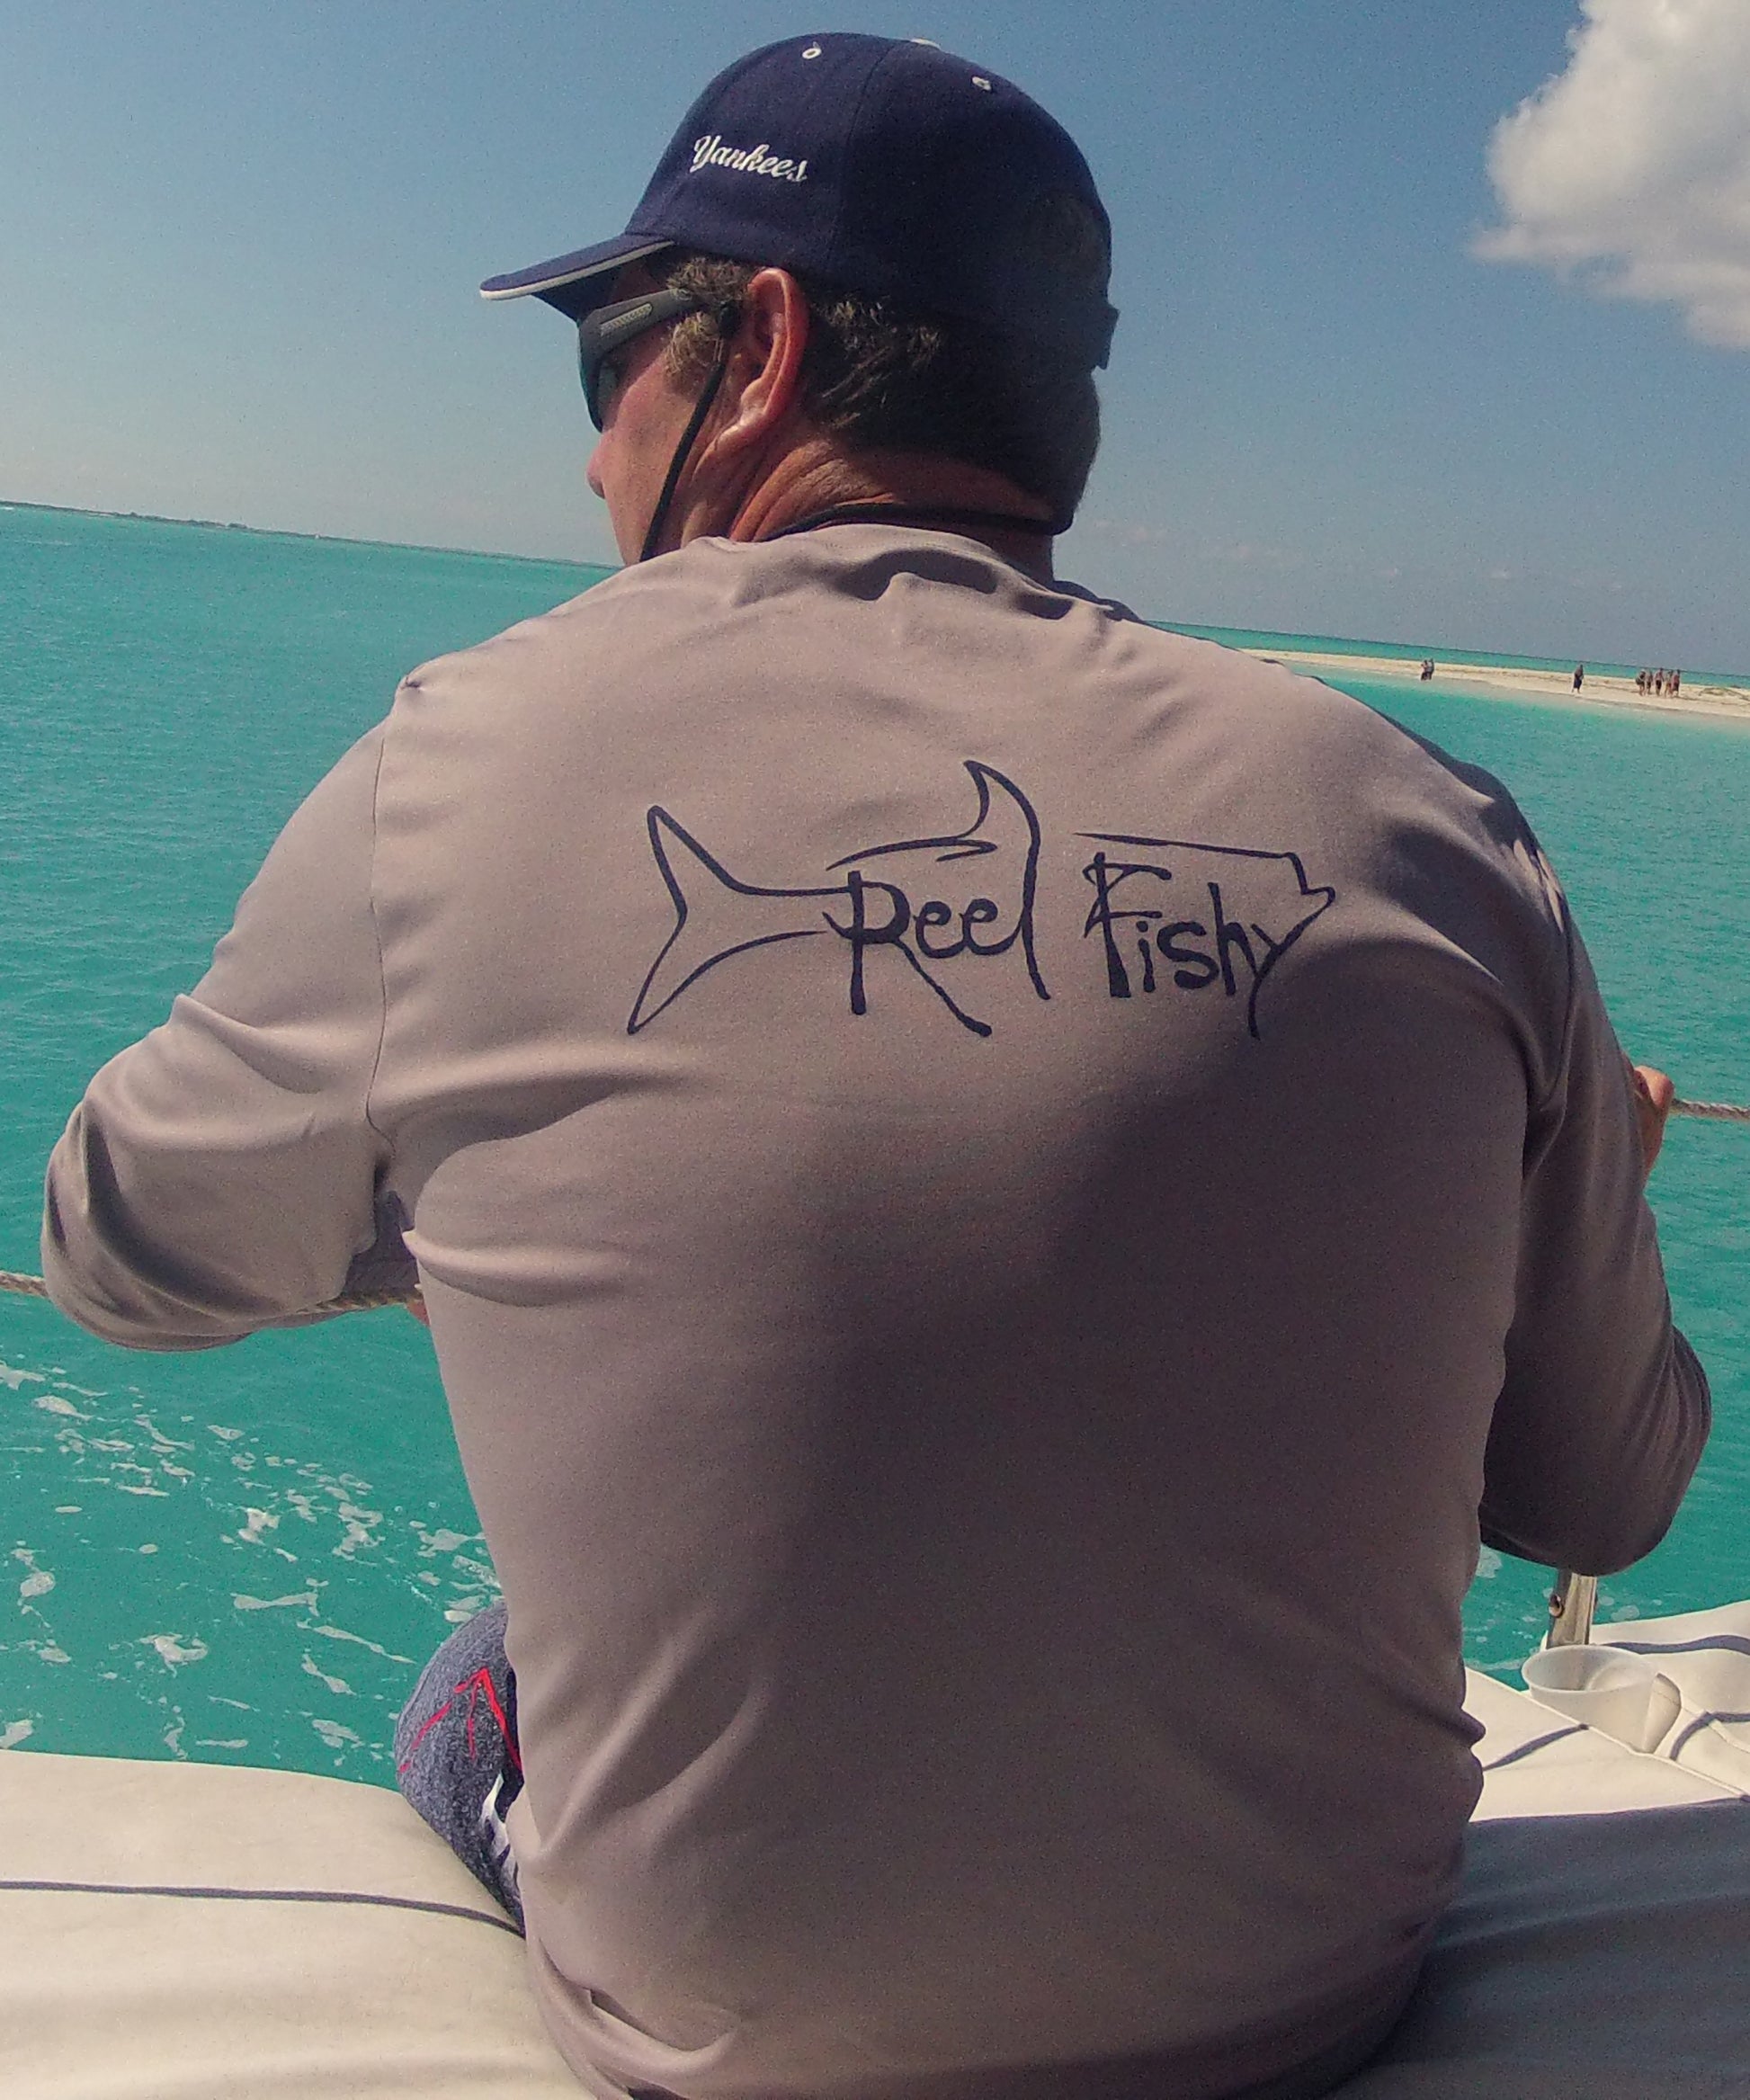 Tarpon Performance Digital Camo 50+uv Fishing Long Sleeve Shirts- Reel Fishy Apparel M / Aqua Blue Camo - unisex